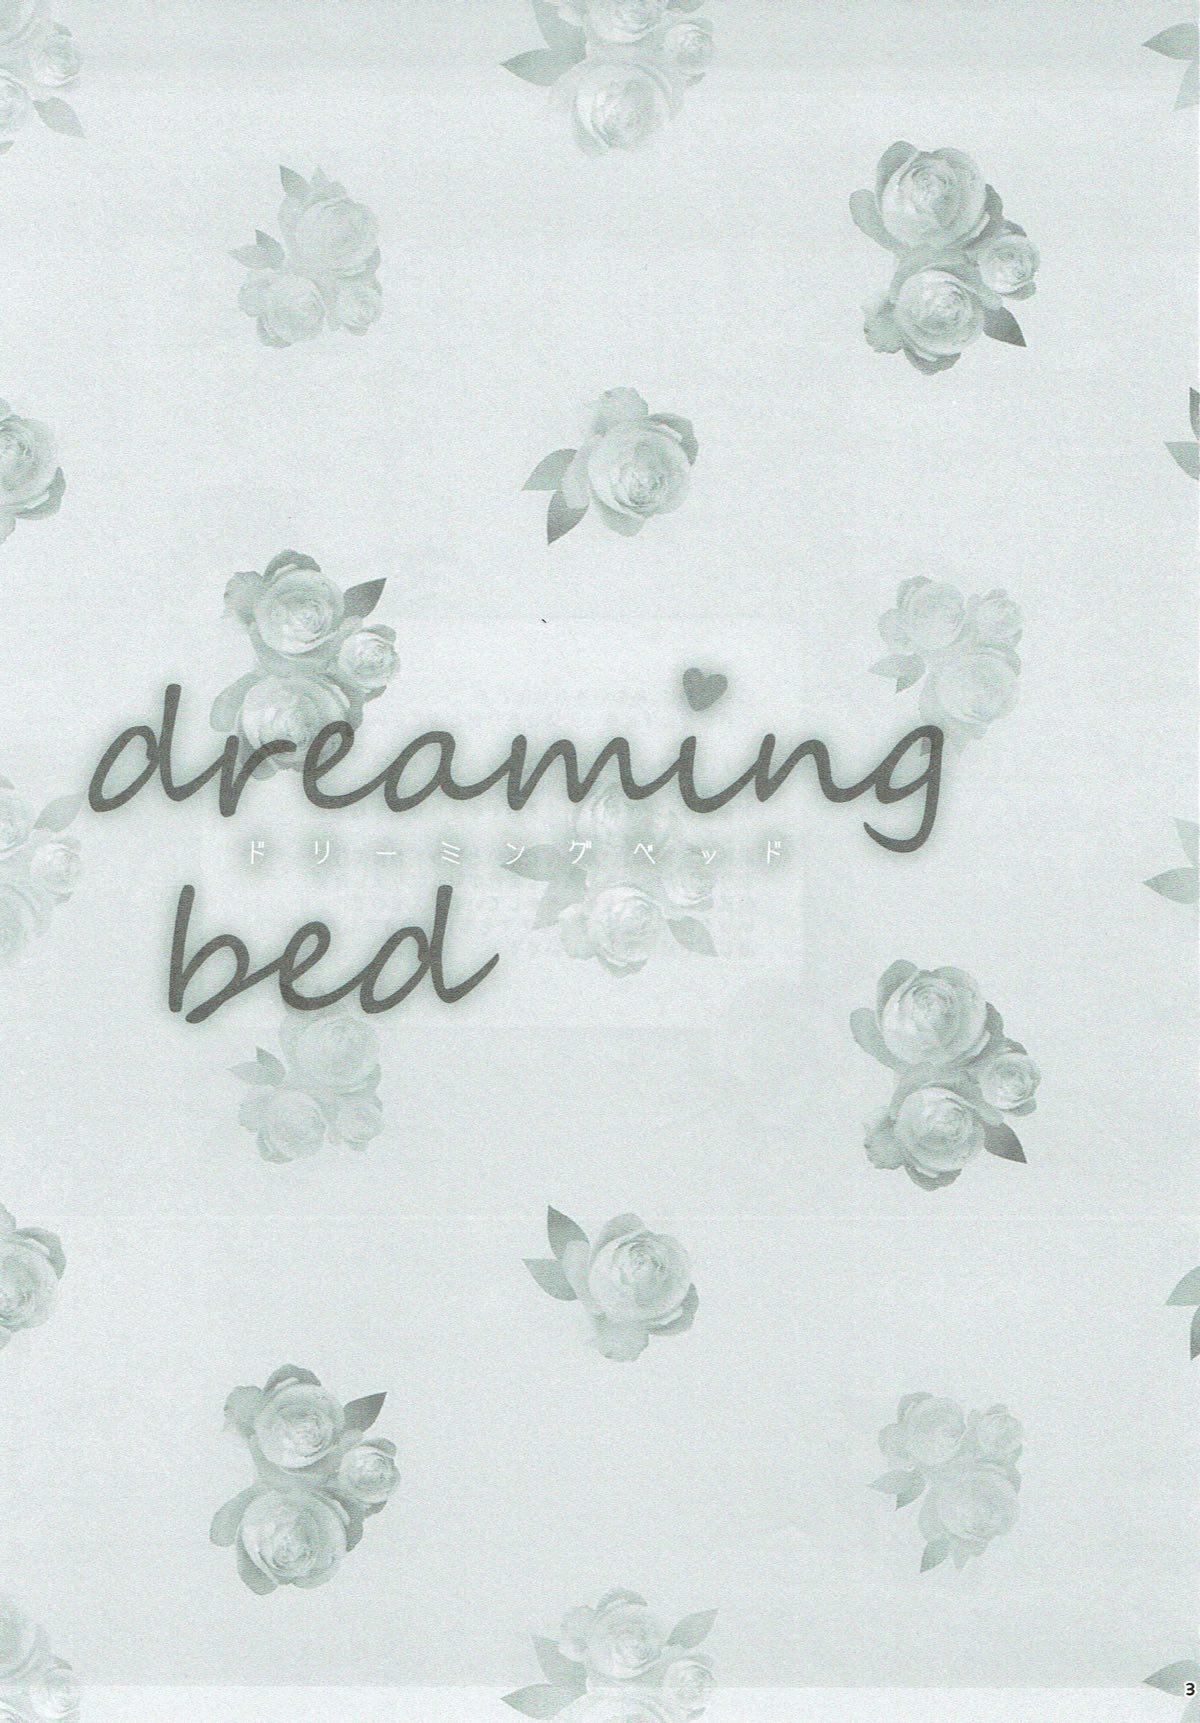 Fellatio dreaming bed - Bang dream Tamil - Page 2